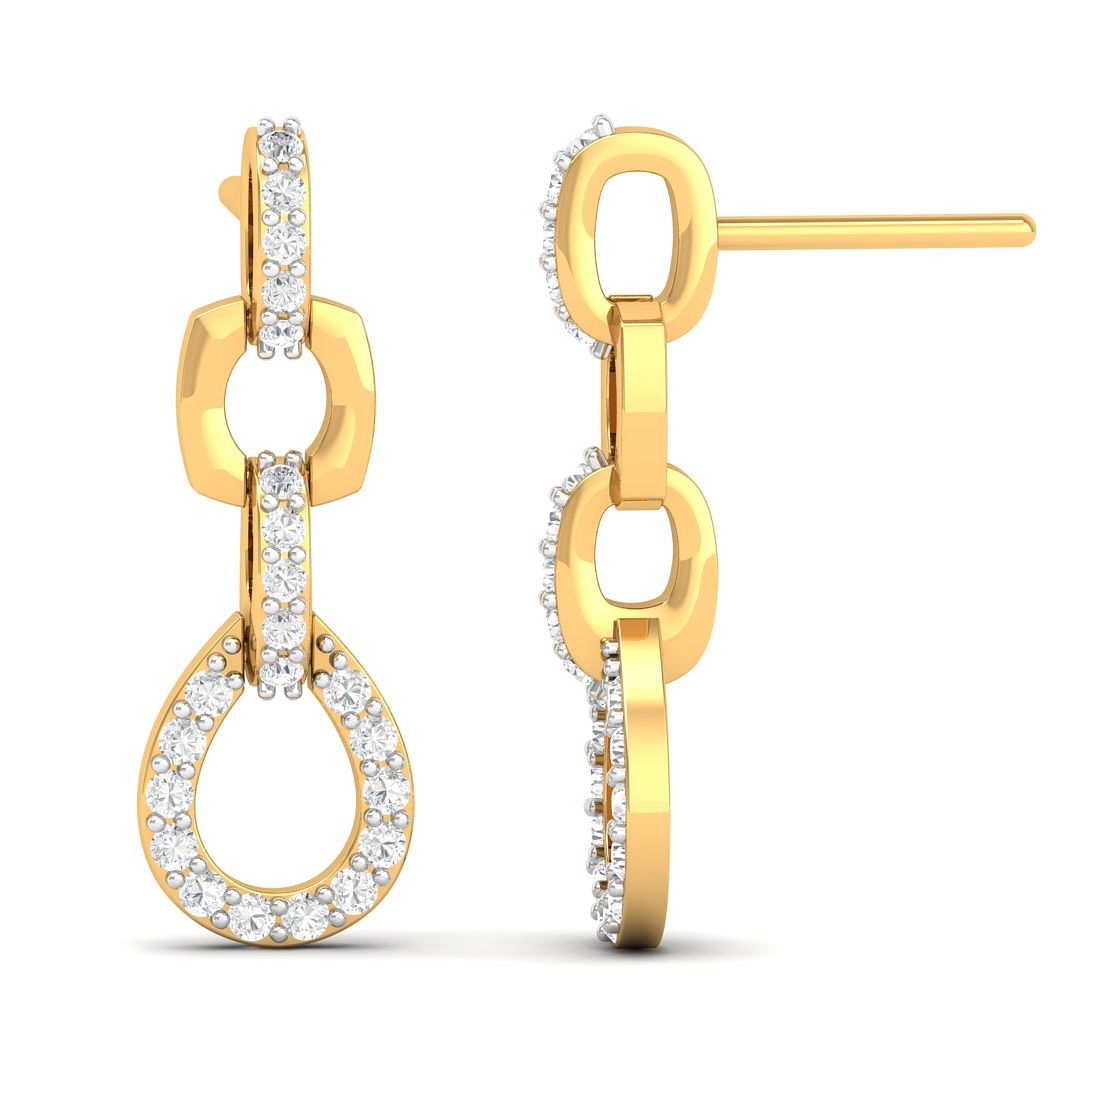 10k Yellow Gold Drops Of Heaven Diamond Earrings For Gift